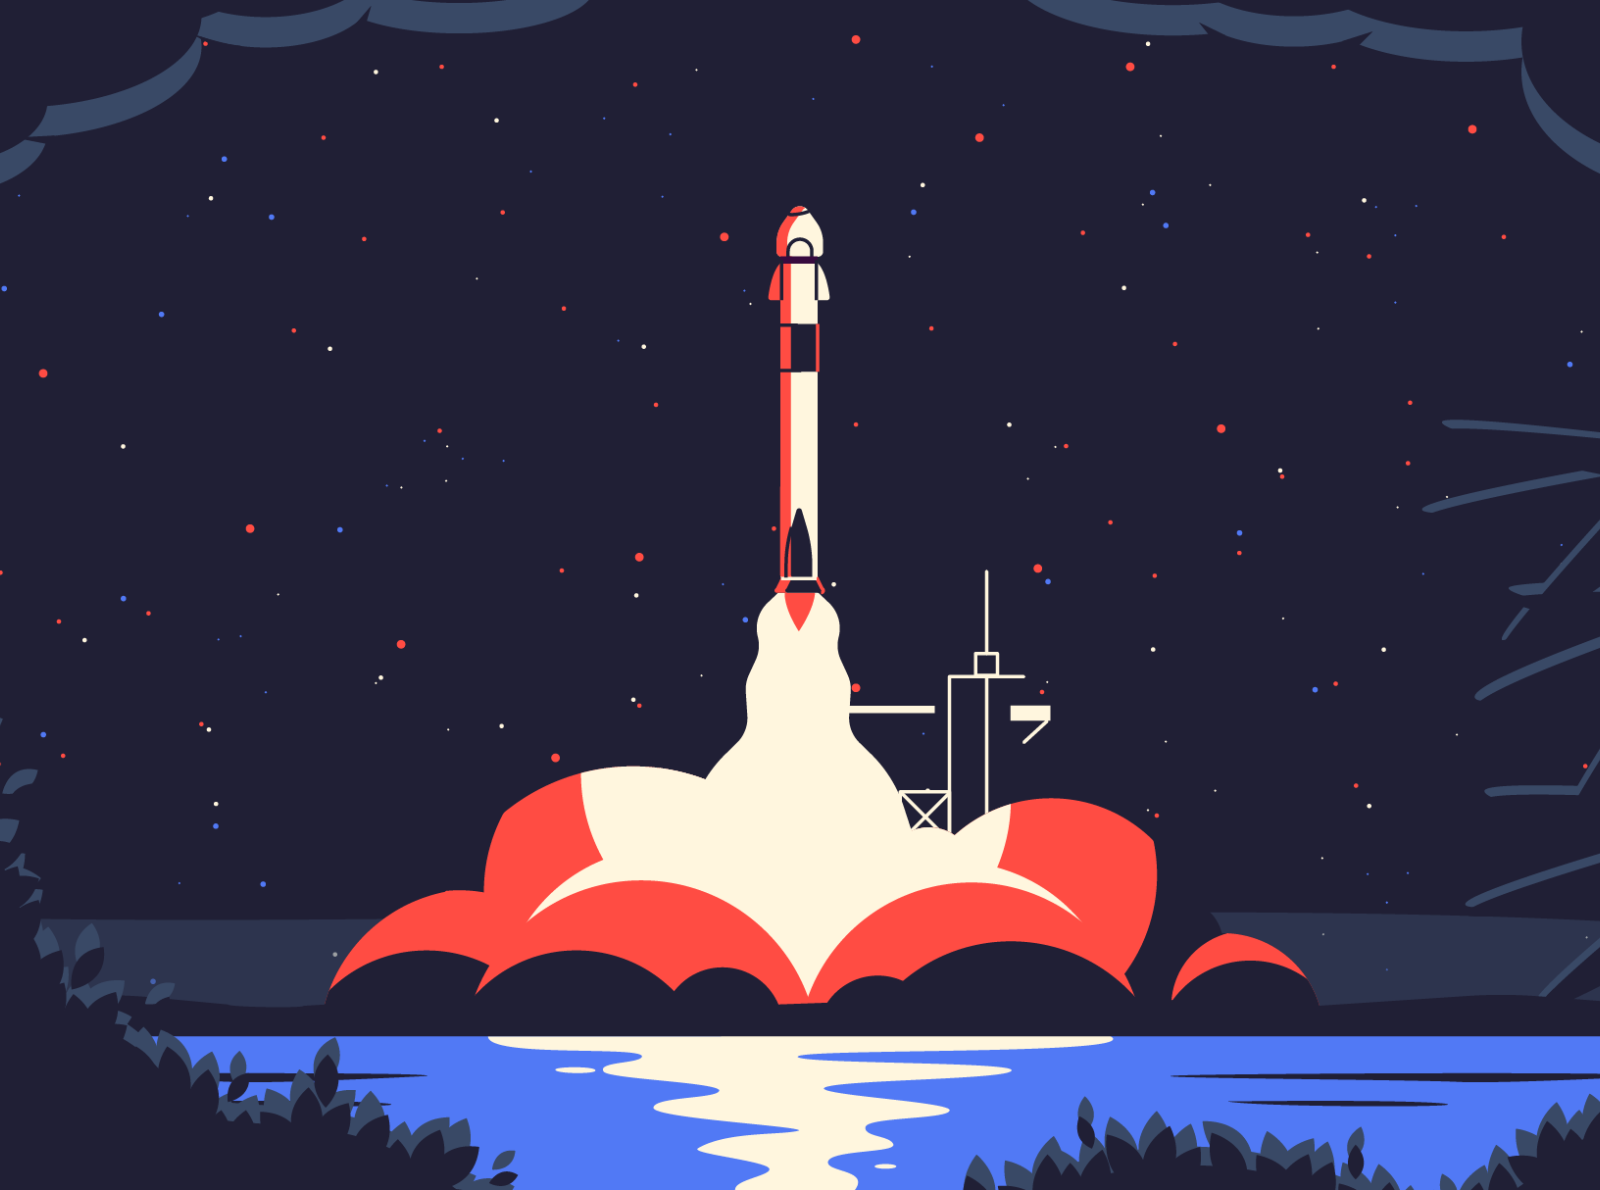 Rocket Launch by Natália Brondani on Dribbble